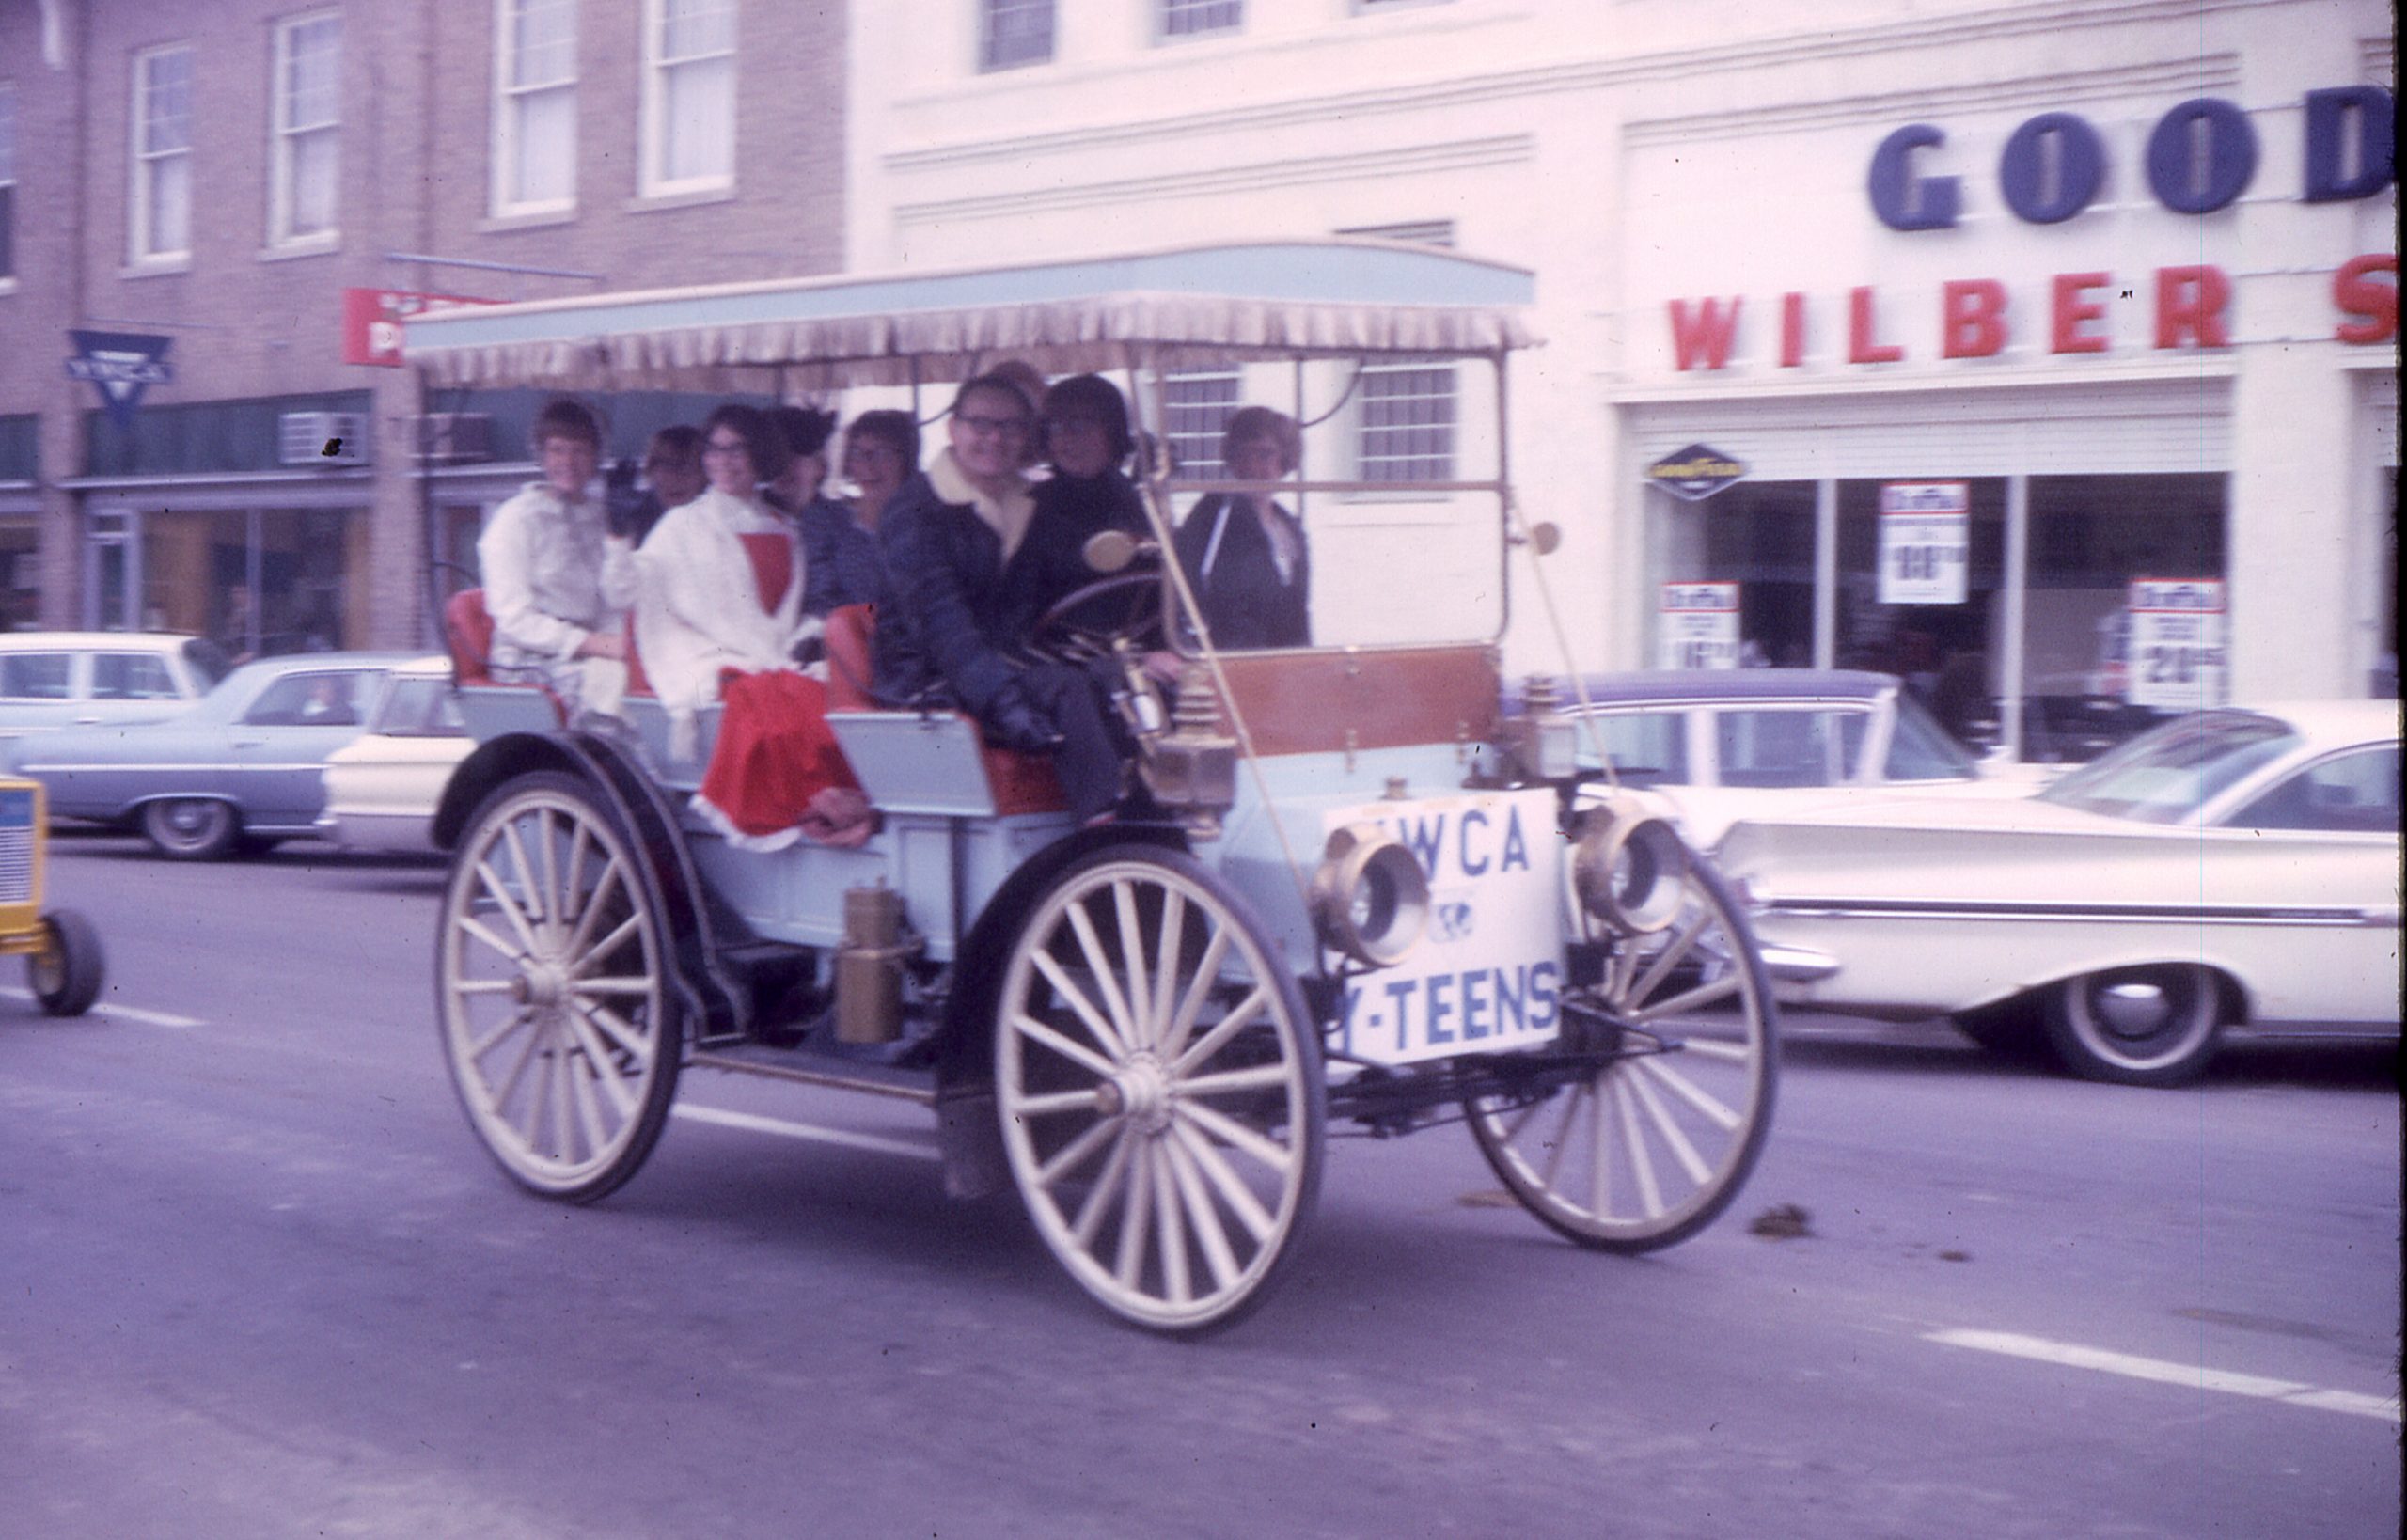 YWCA Teen parade float. Courtesy of Adams County Historical Society.